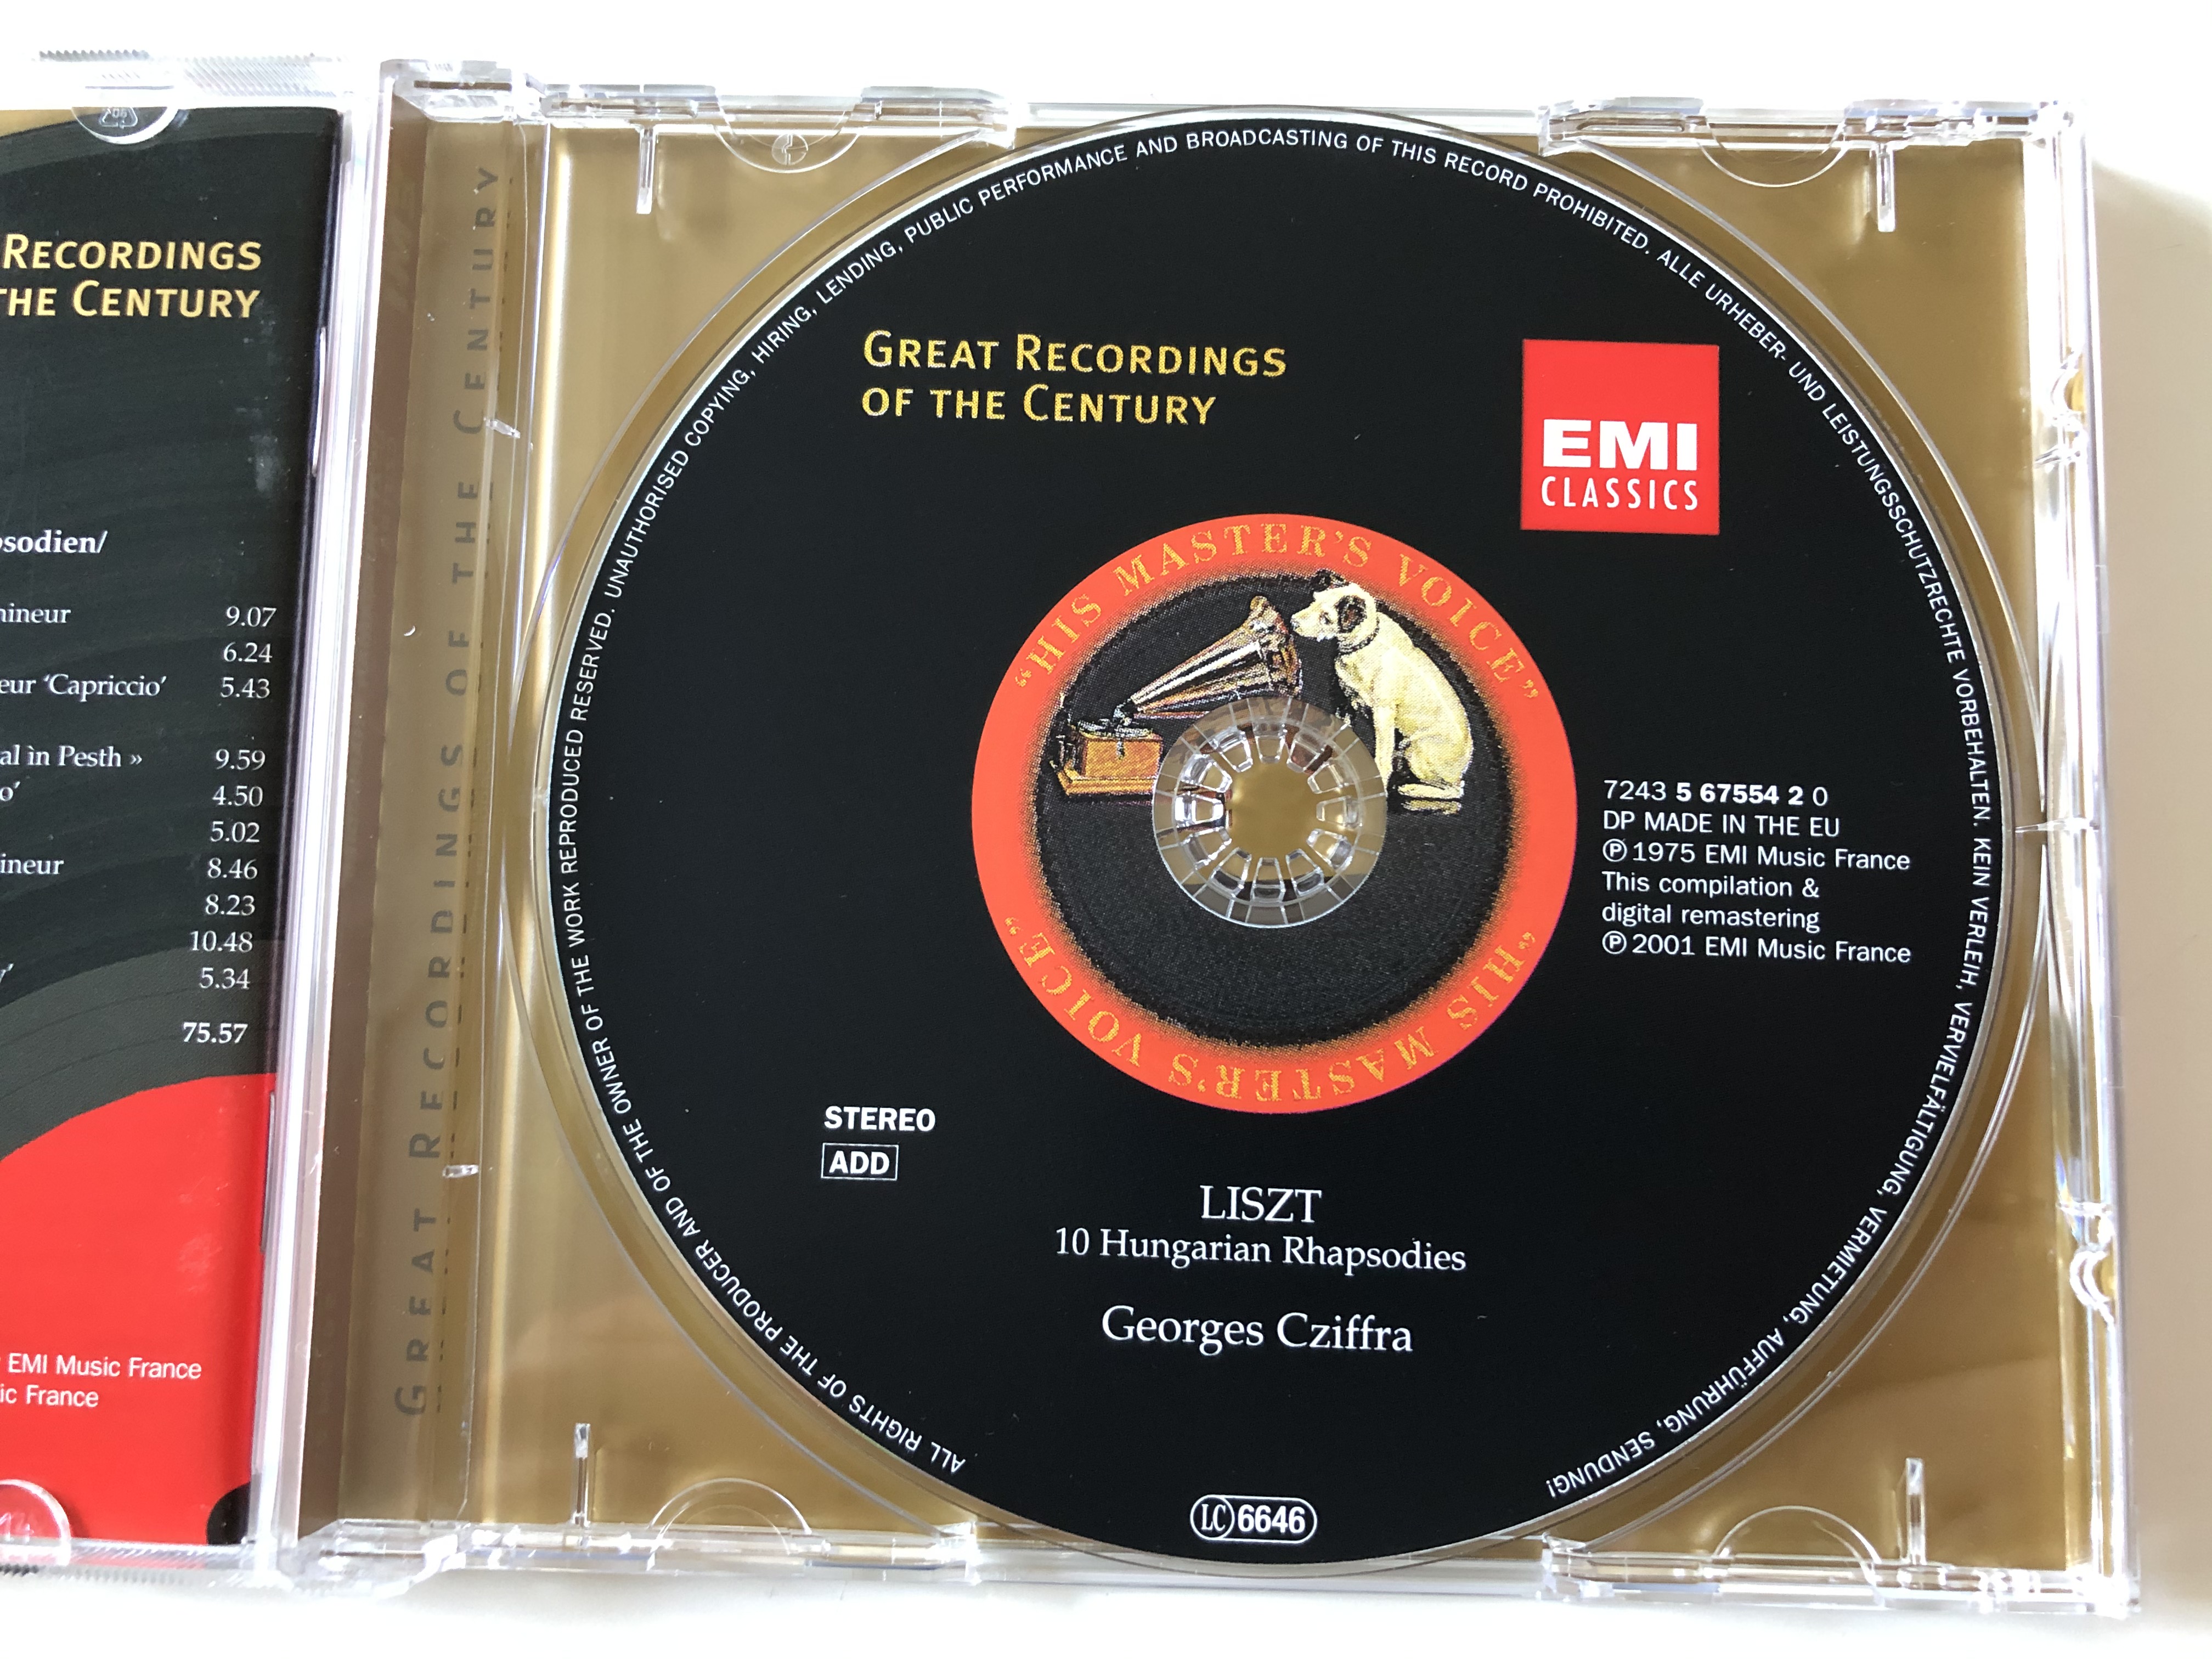 liszt-10-hungarian-rhapsodies-georges-cziffra-great-recordings-of-the-century-emi-classics-audio-cd-2001-stereo-724356755420-5-.jpg